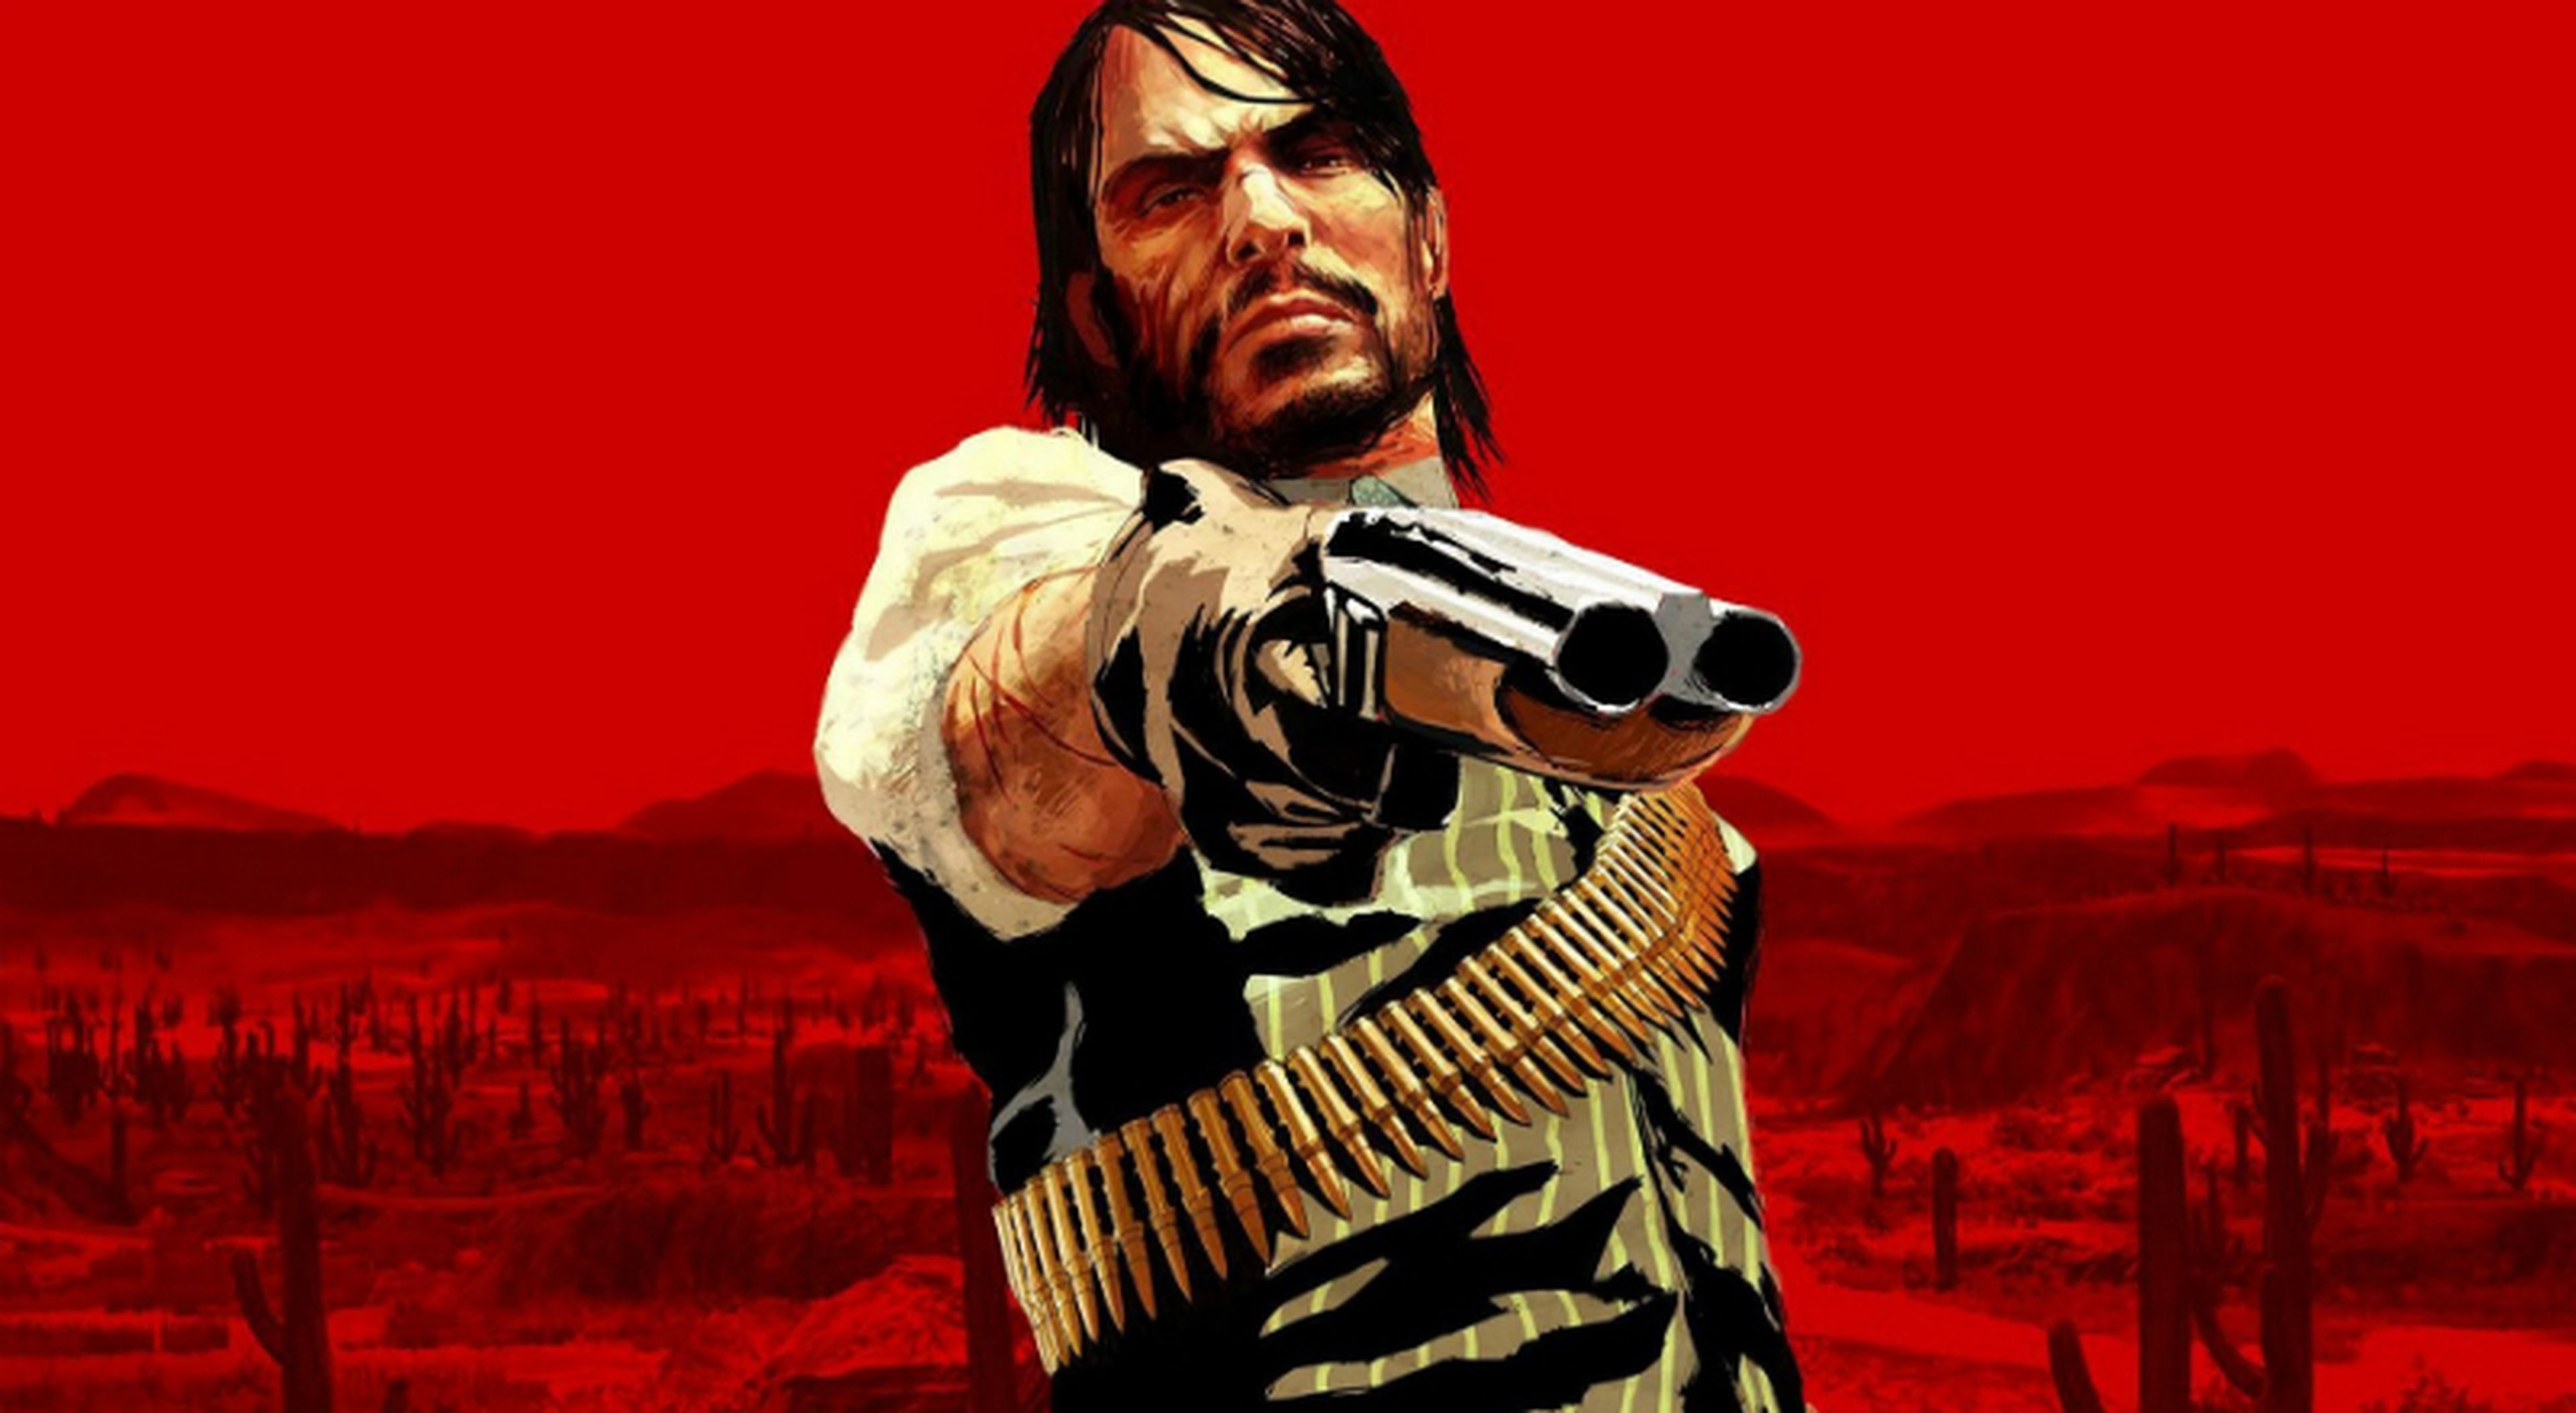 Red Dead Redemption retirado temporalmente de Xbox One